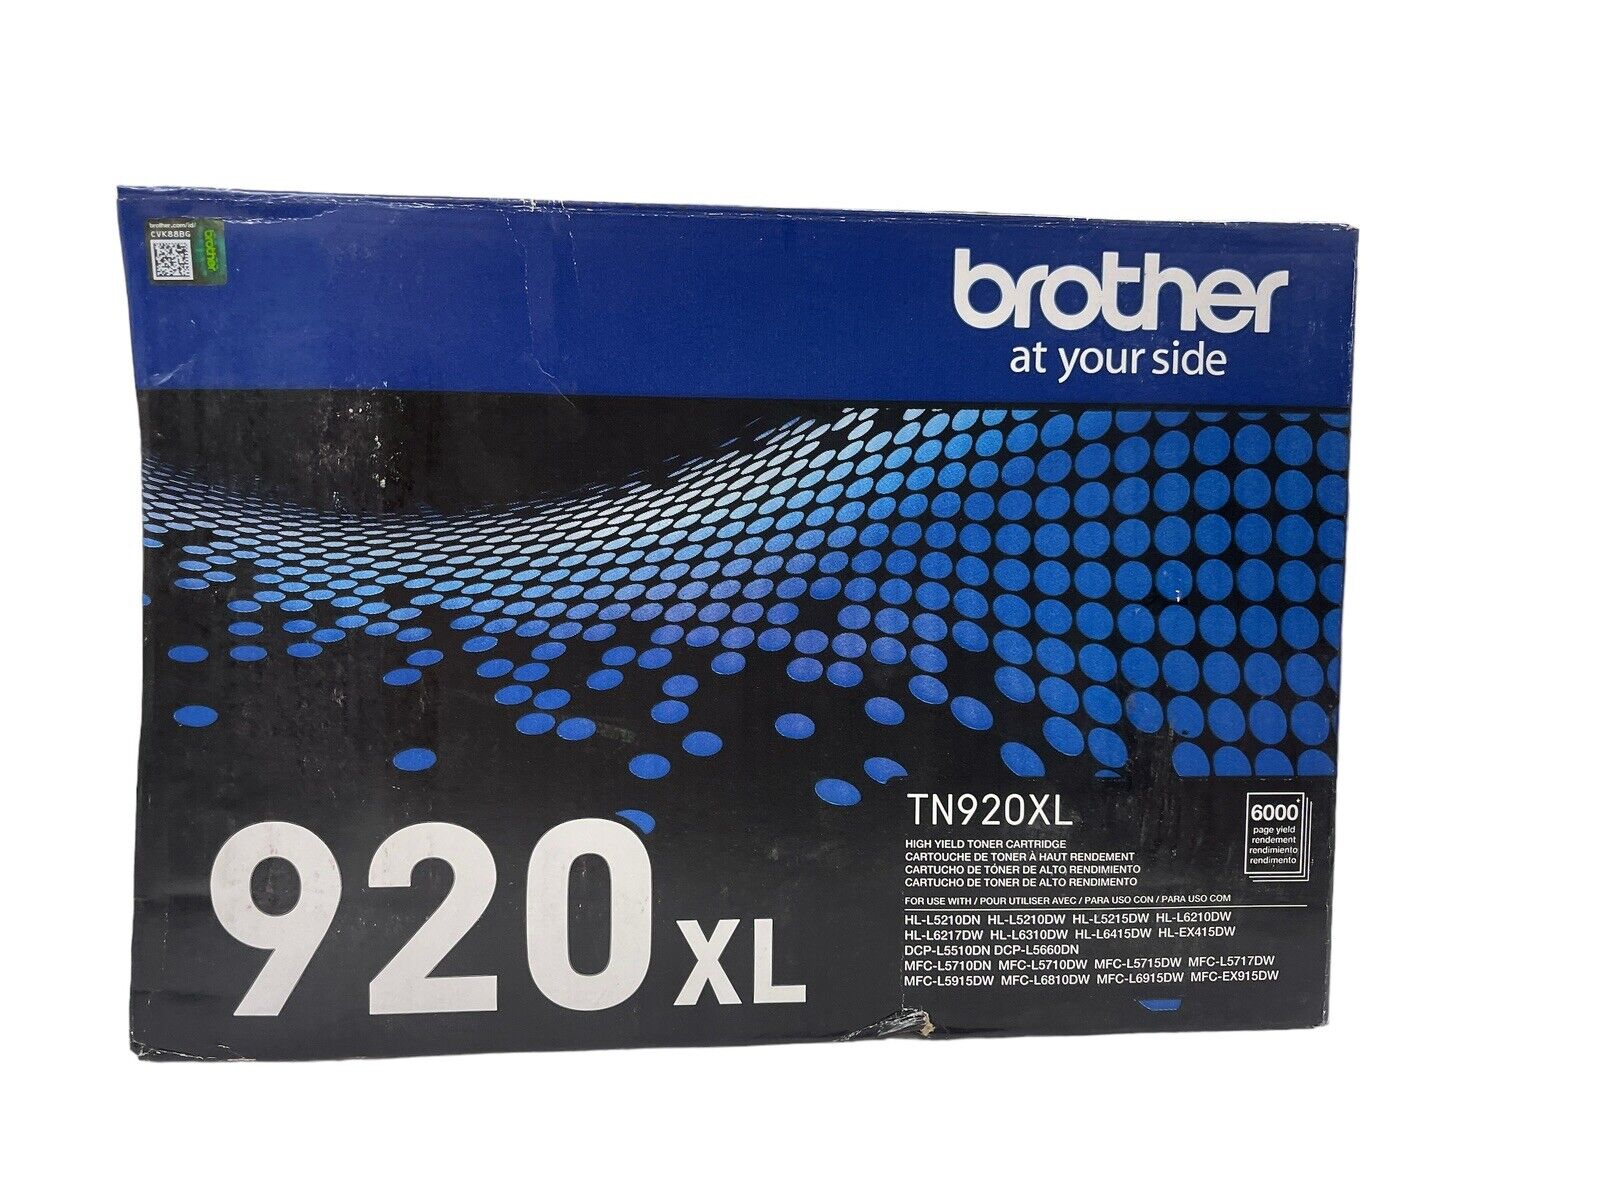 Brother - TN920XL High-Yield Toner Cartridge - Black SEALED